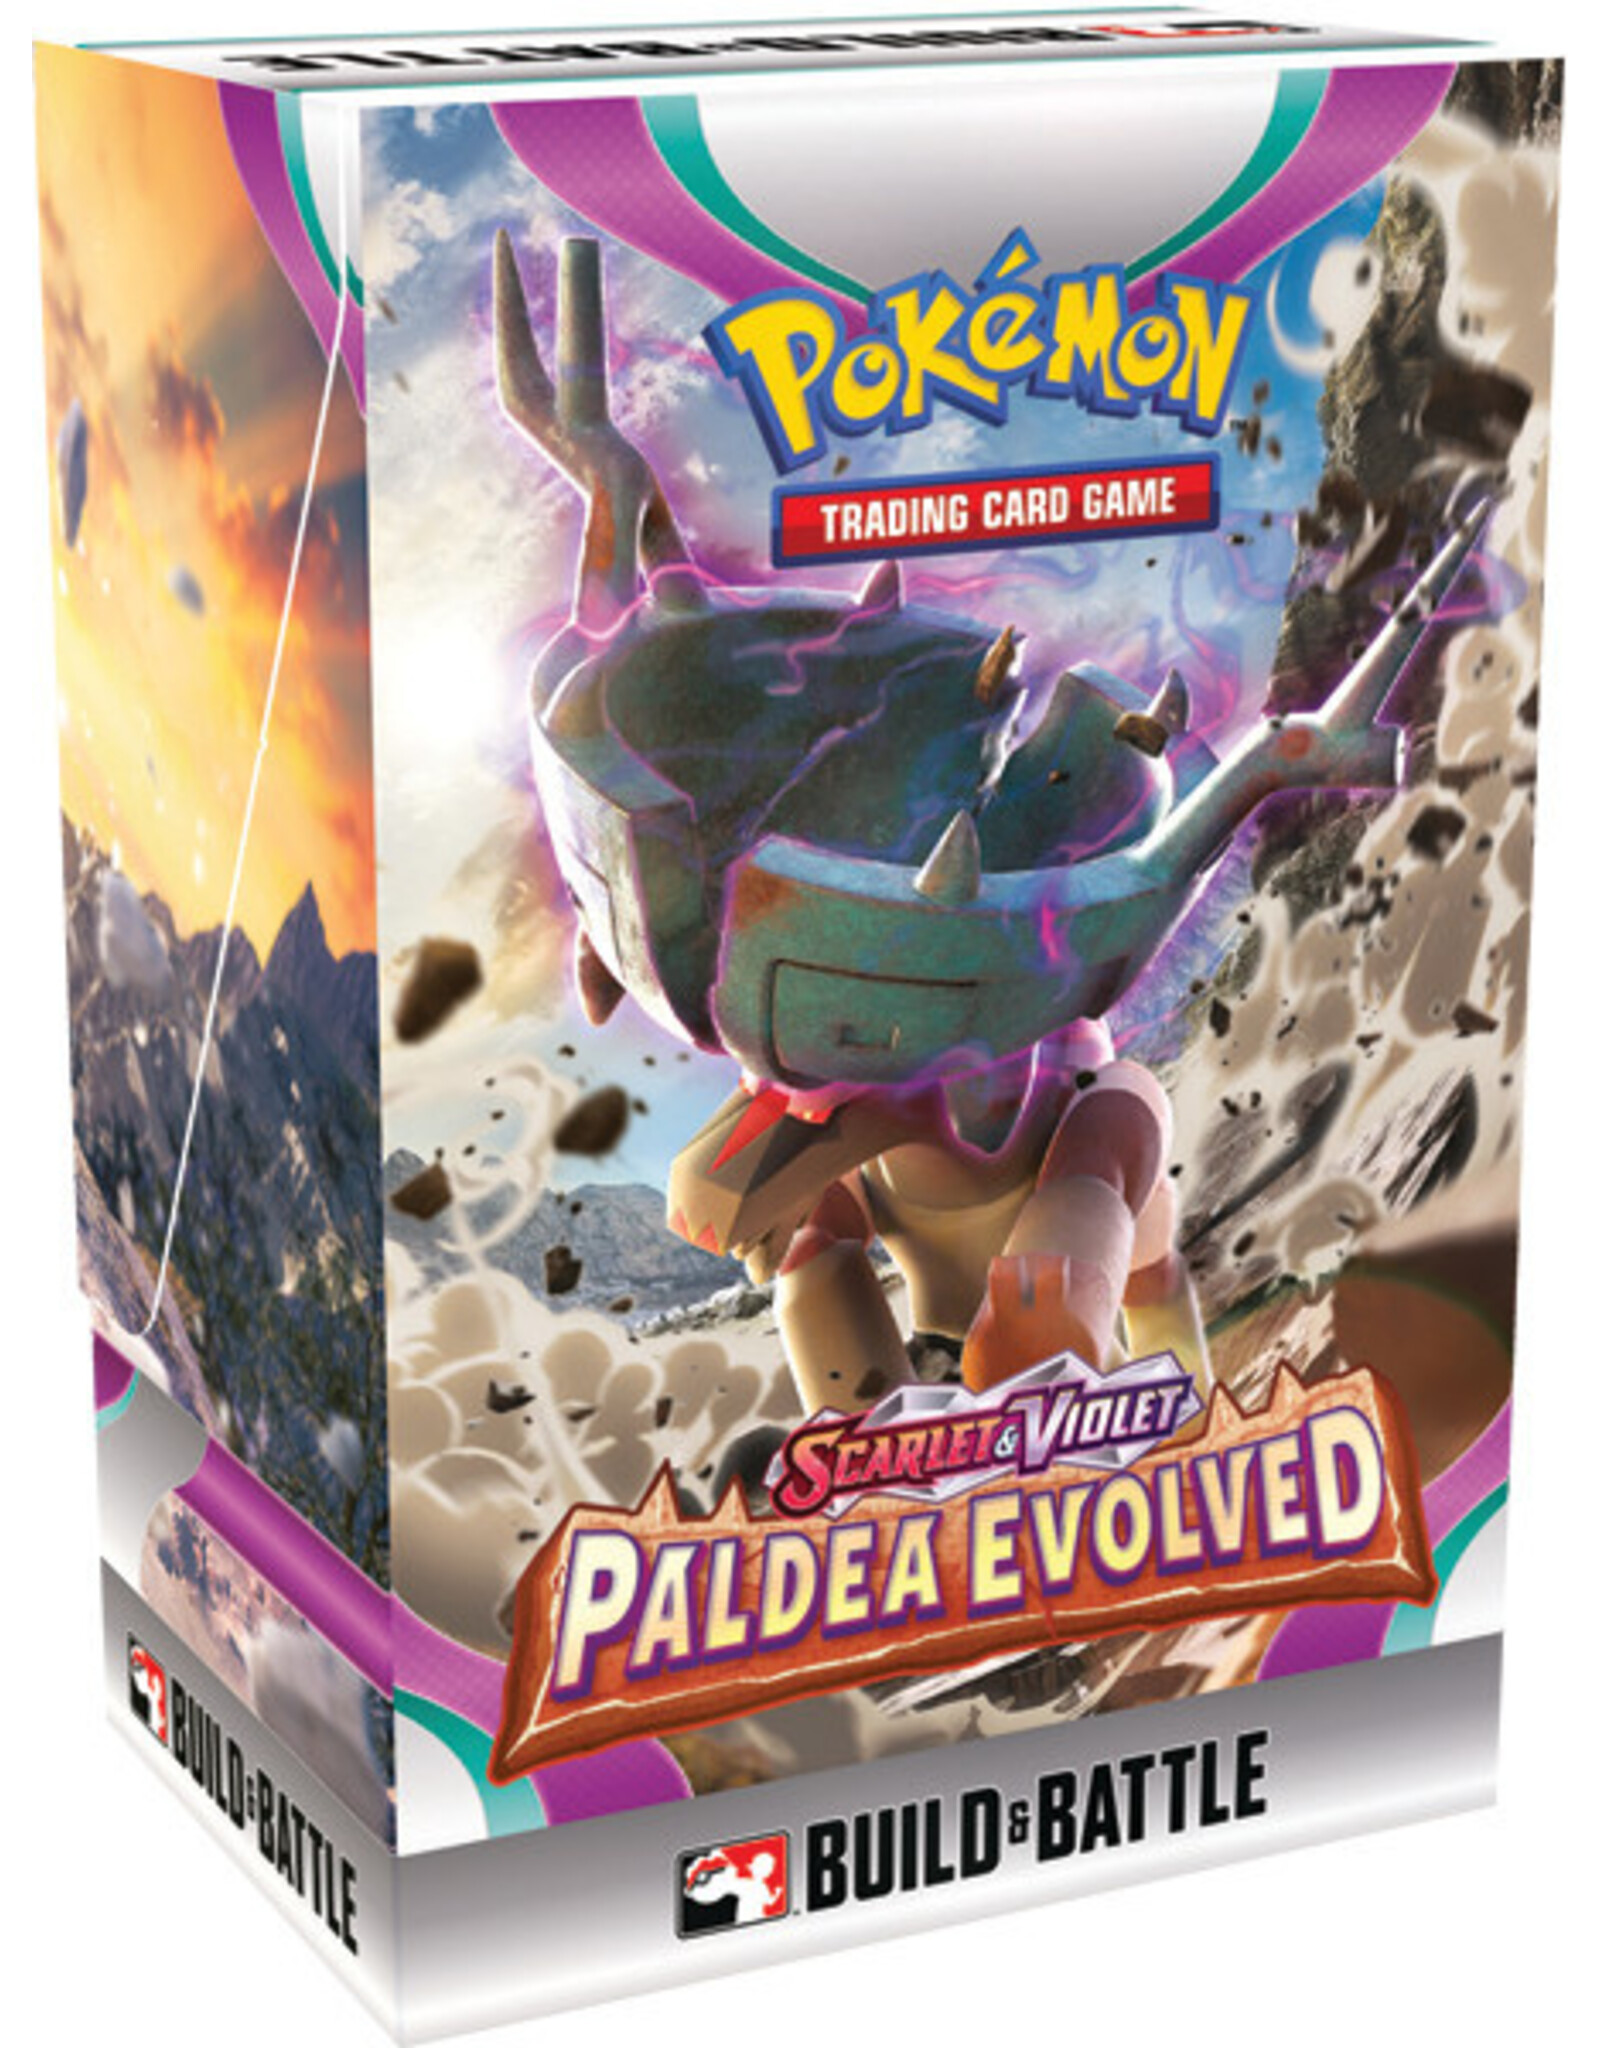 Pokemon SV2 Paldea Evolved Build And Battle Pack